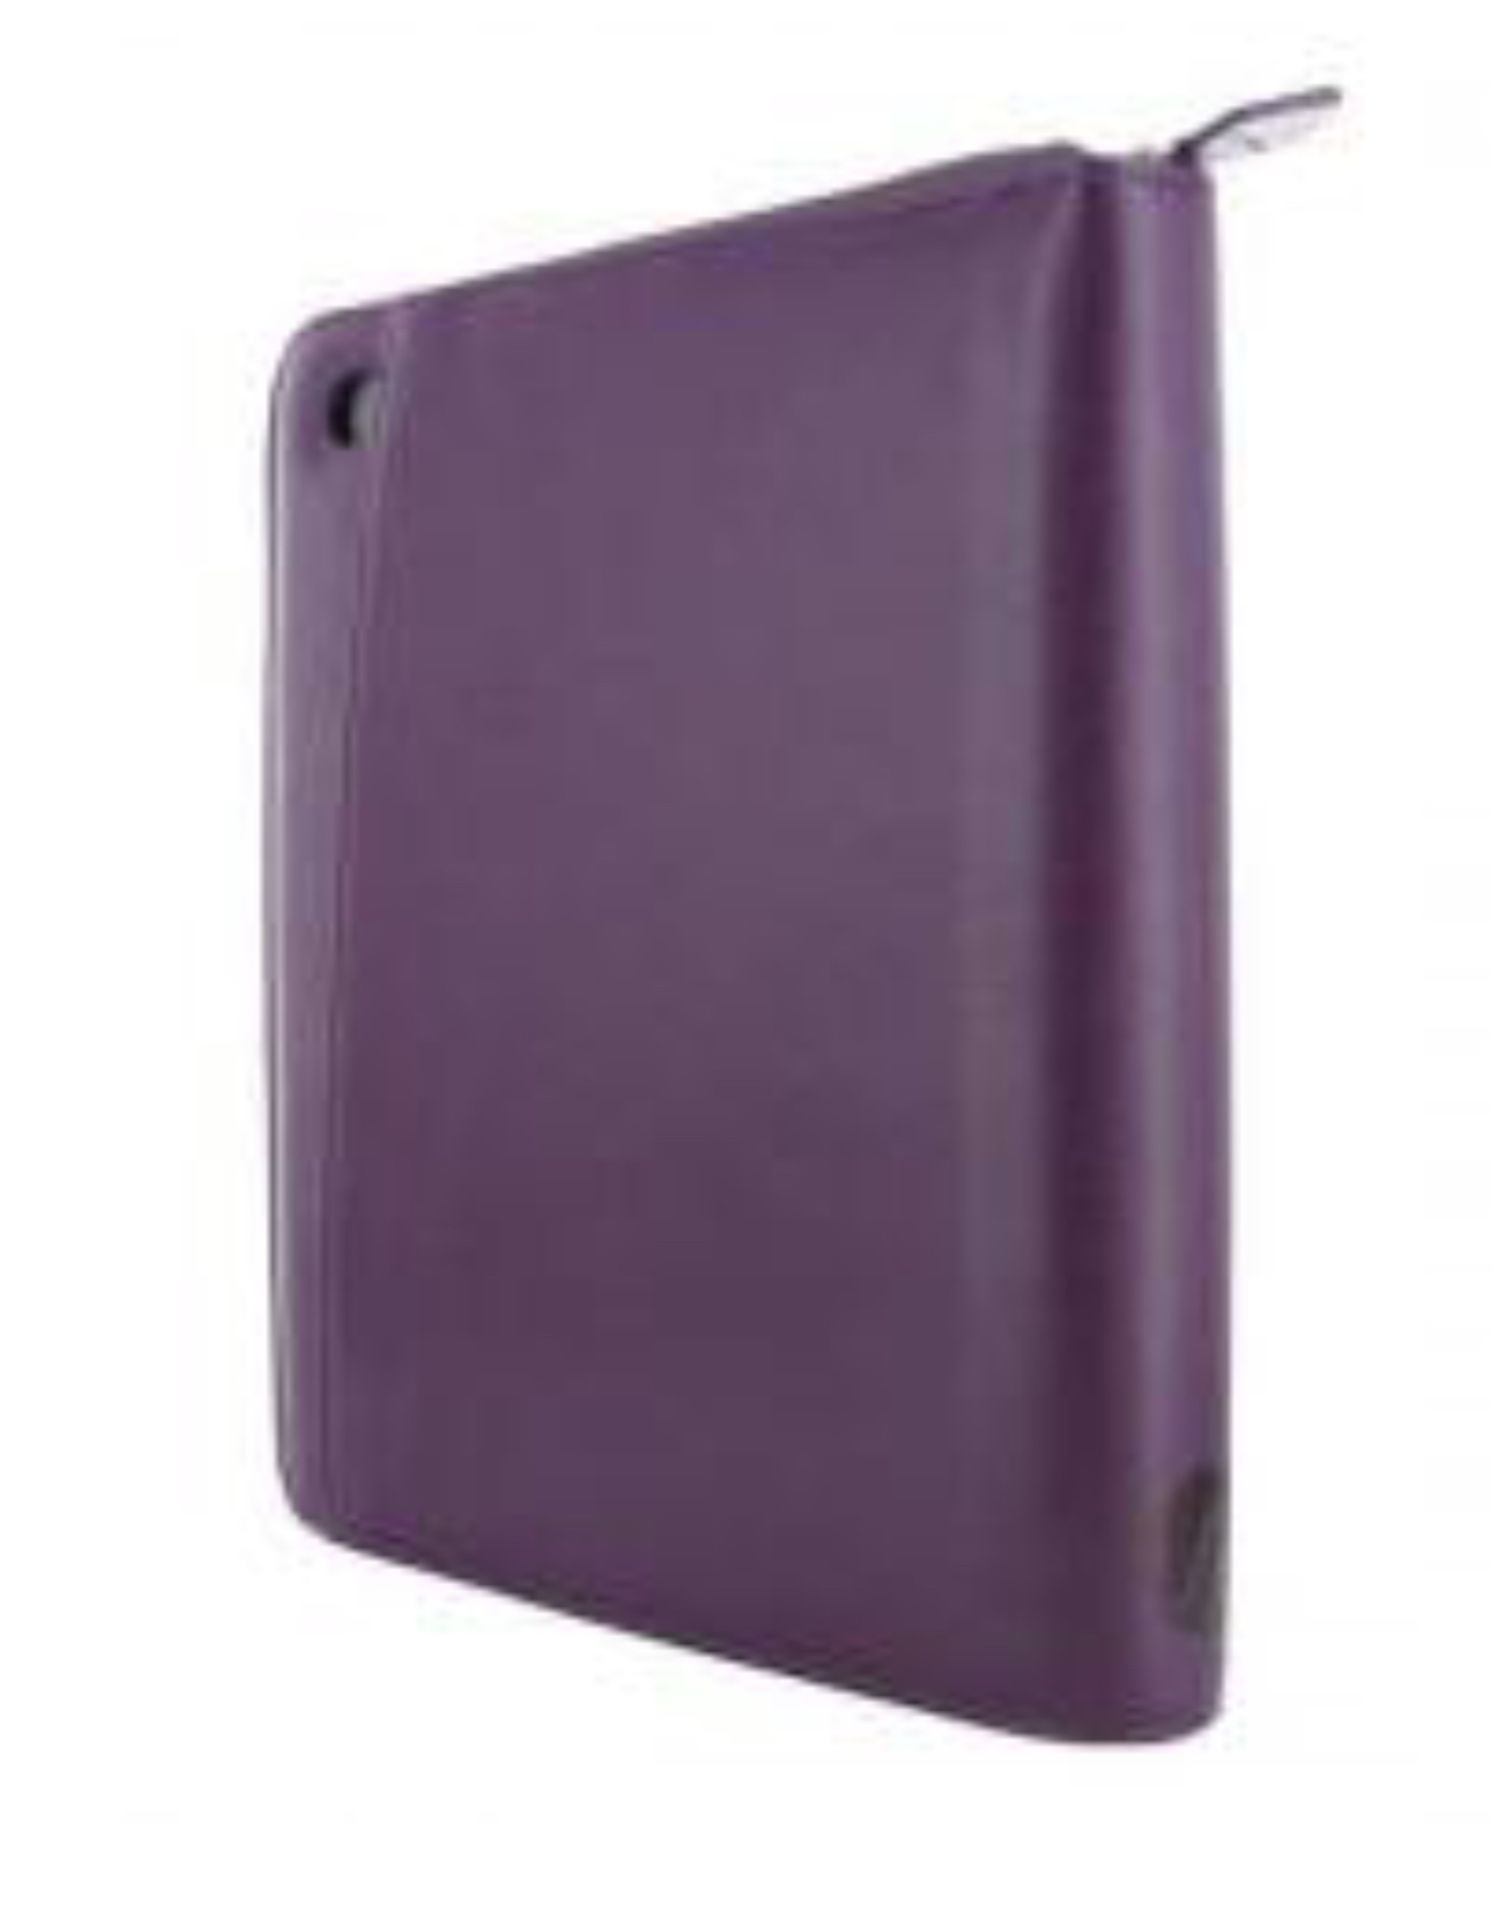 Brand New Filofax Pennybridge A5 iPad Organizer Purple RRP £55.31 - Image 3 of 3